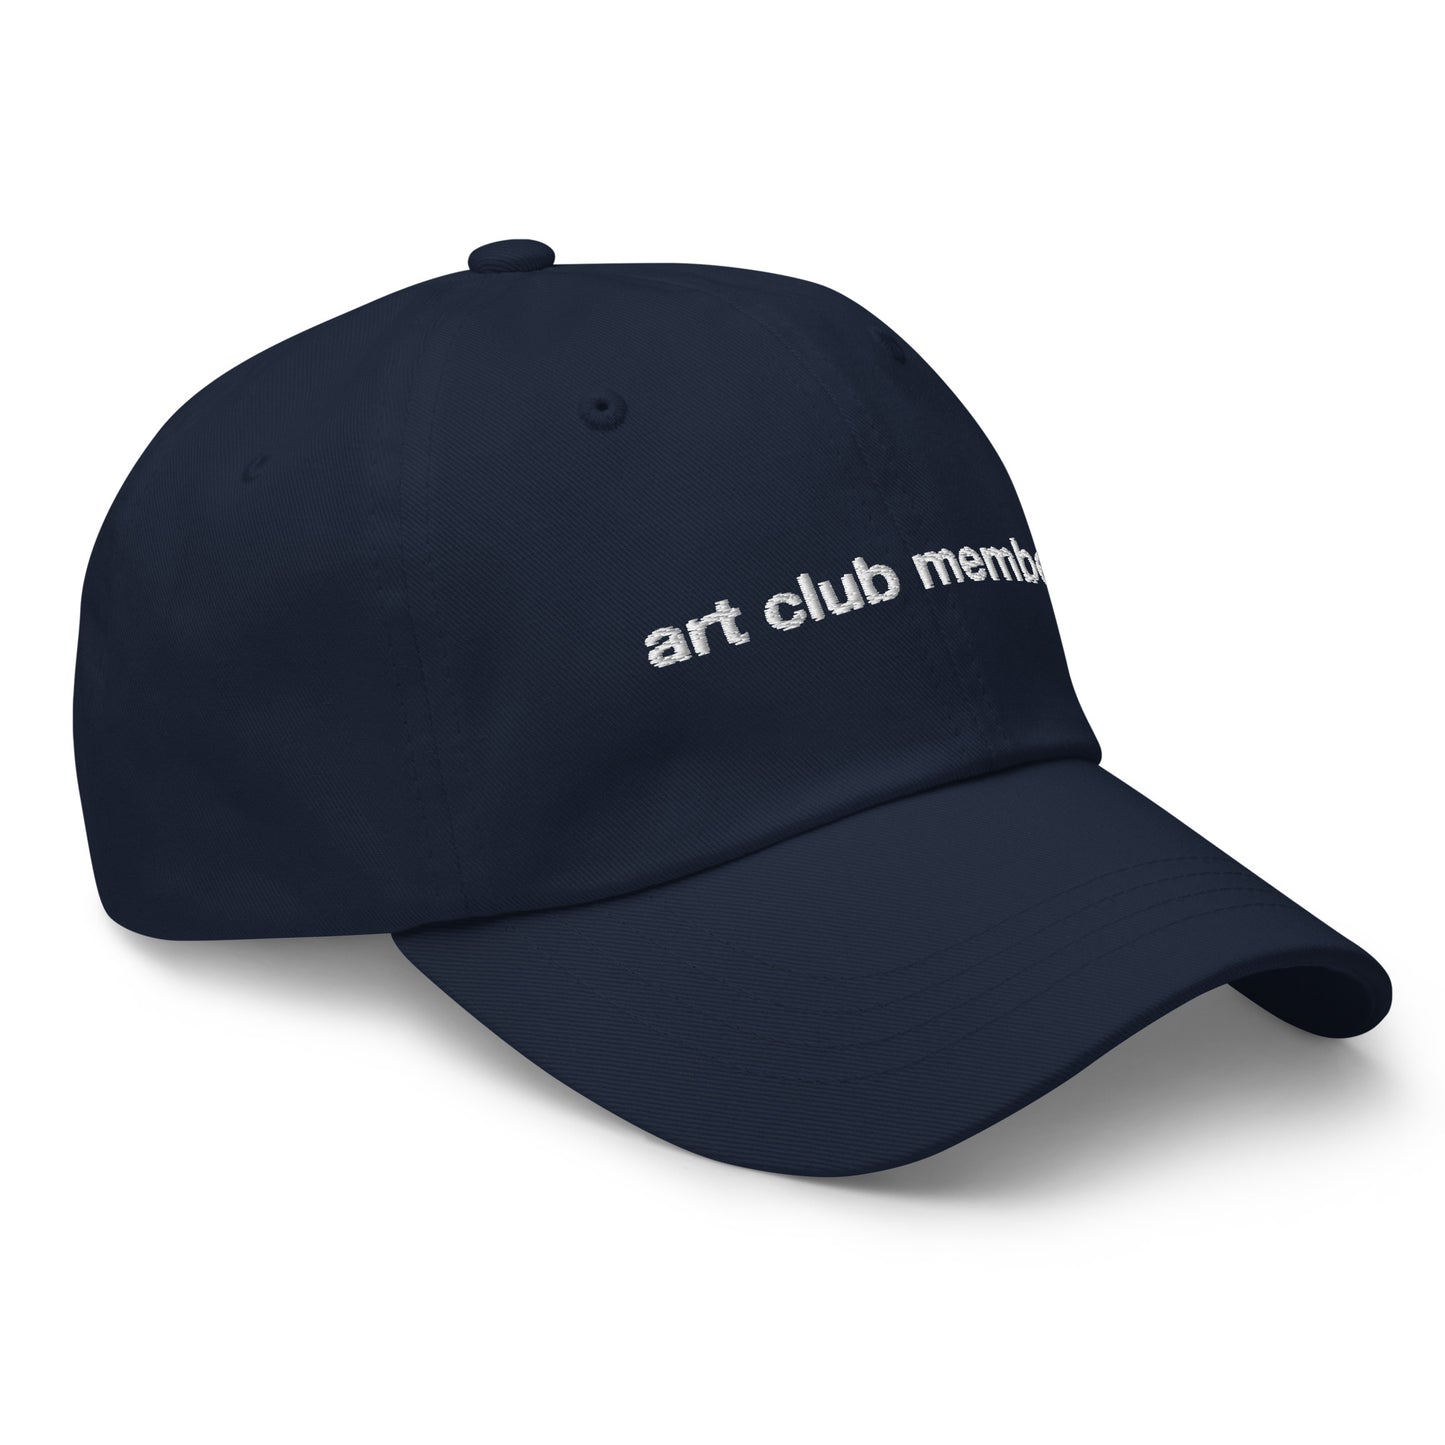 art club member / Dad cap / navy